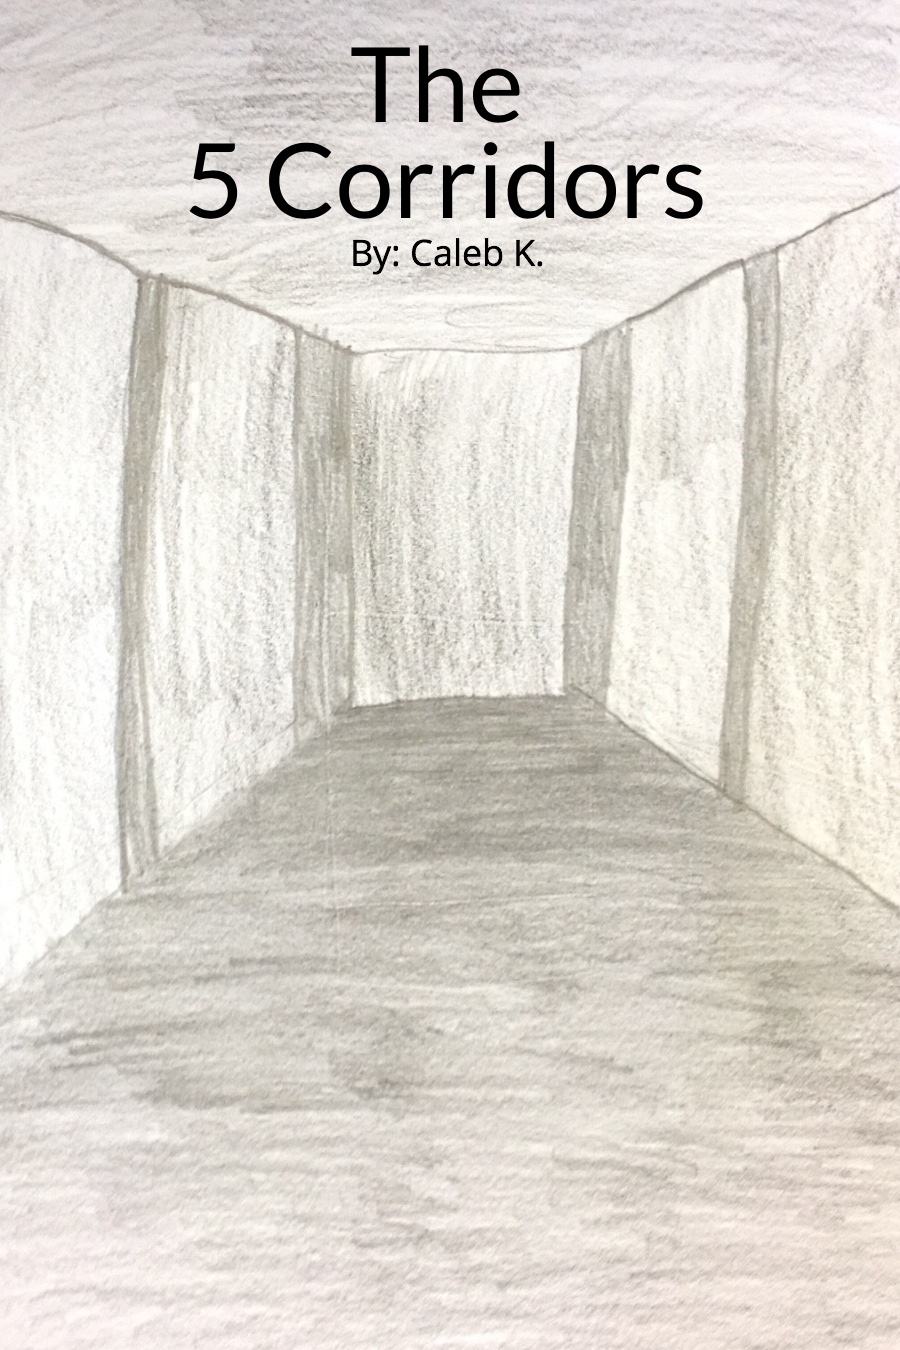 The Five Corridors by Caleb K